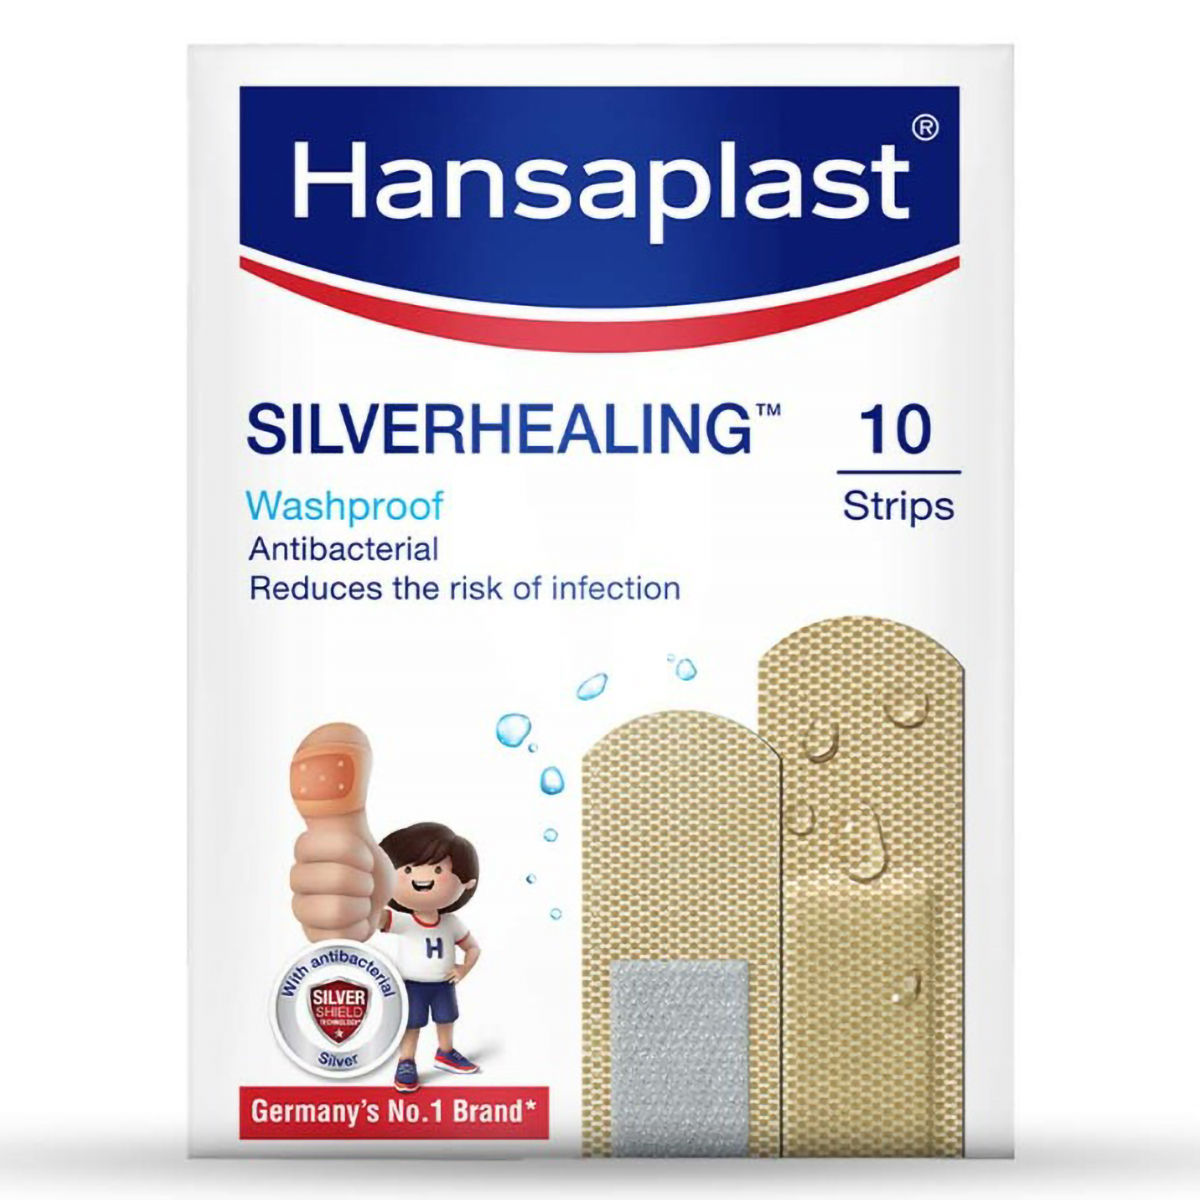 Buy Hansaplast Silverhealing Washproof Strips, 10 Count Online